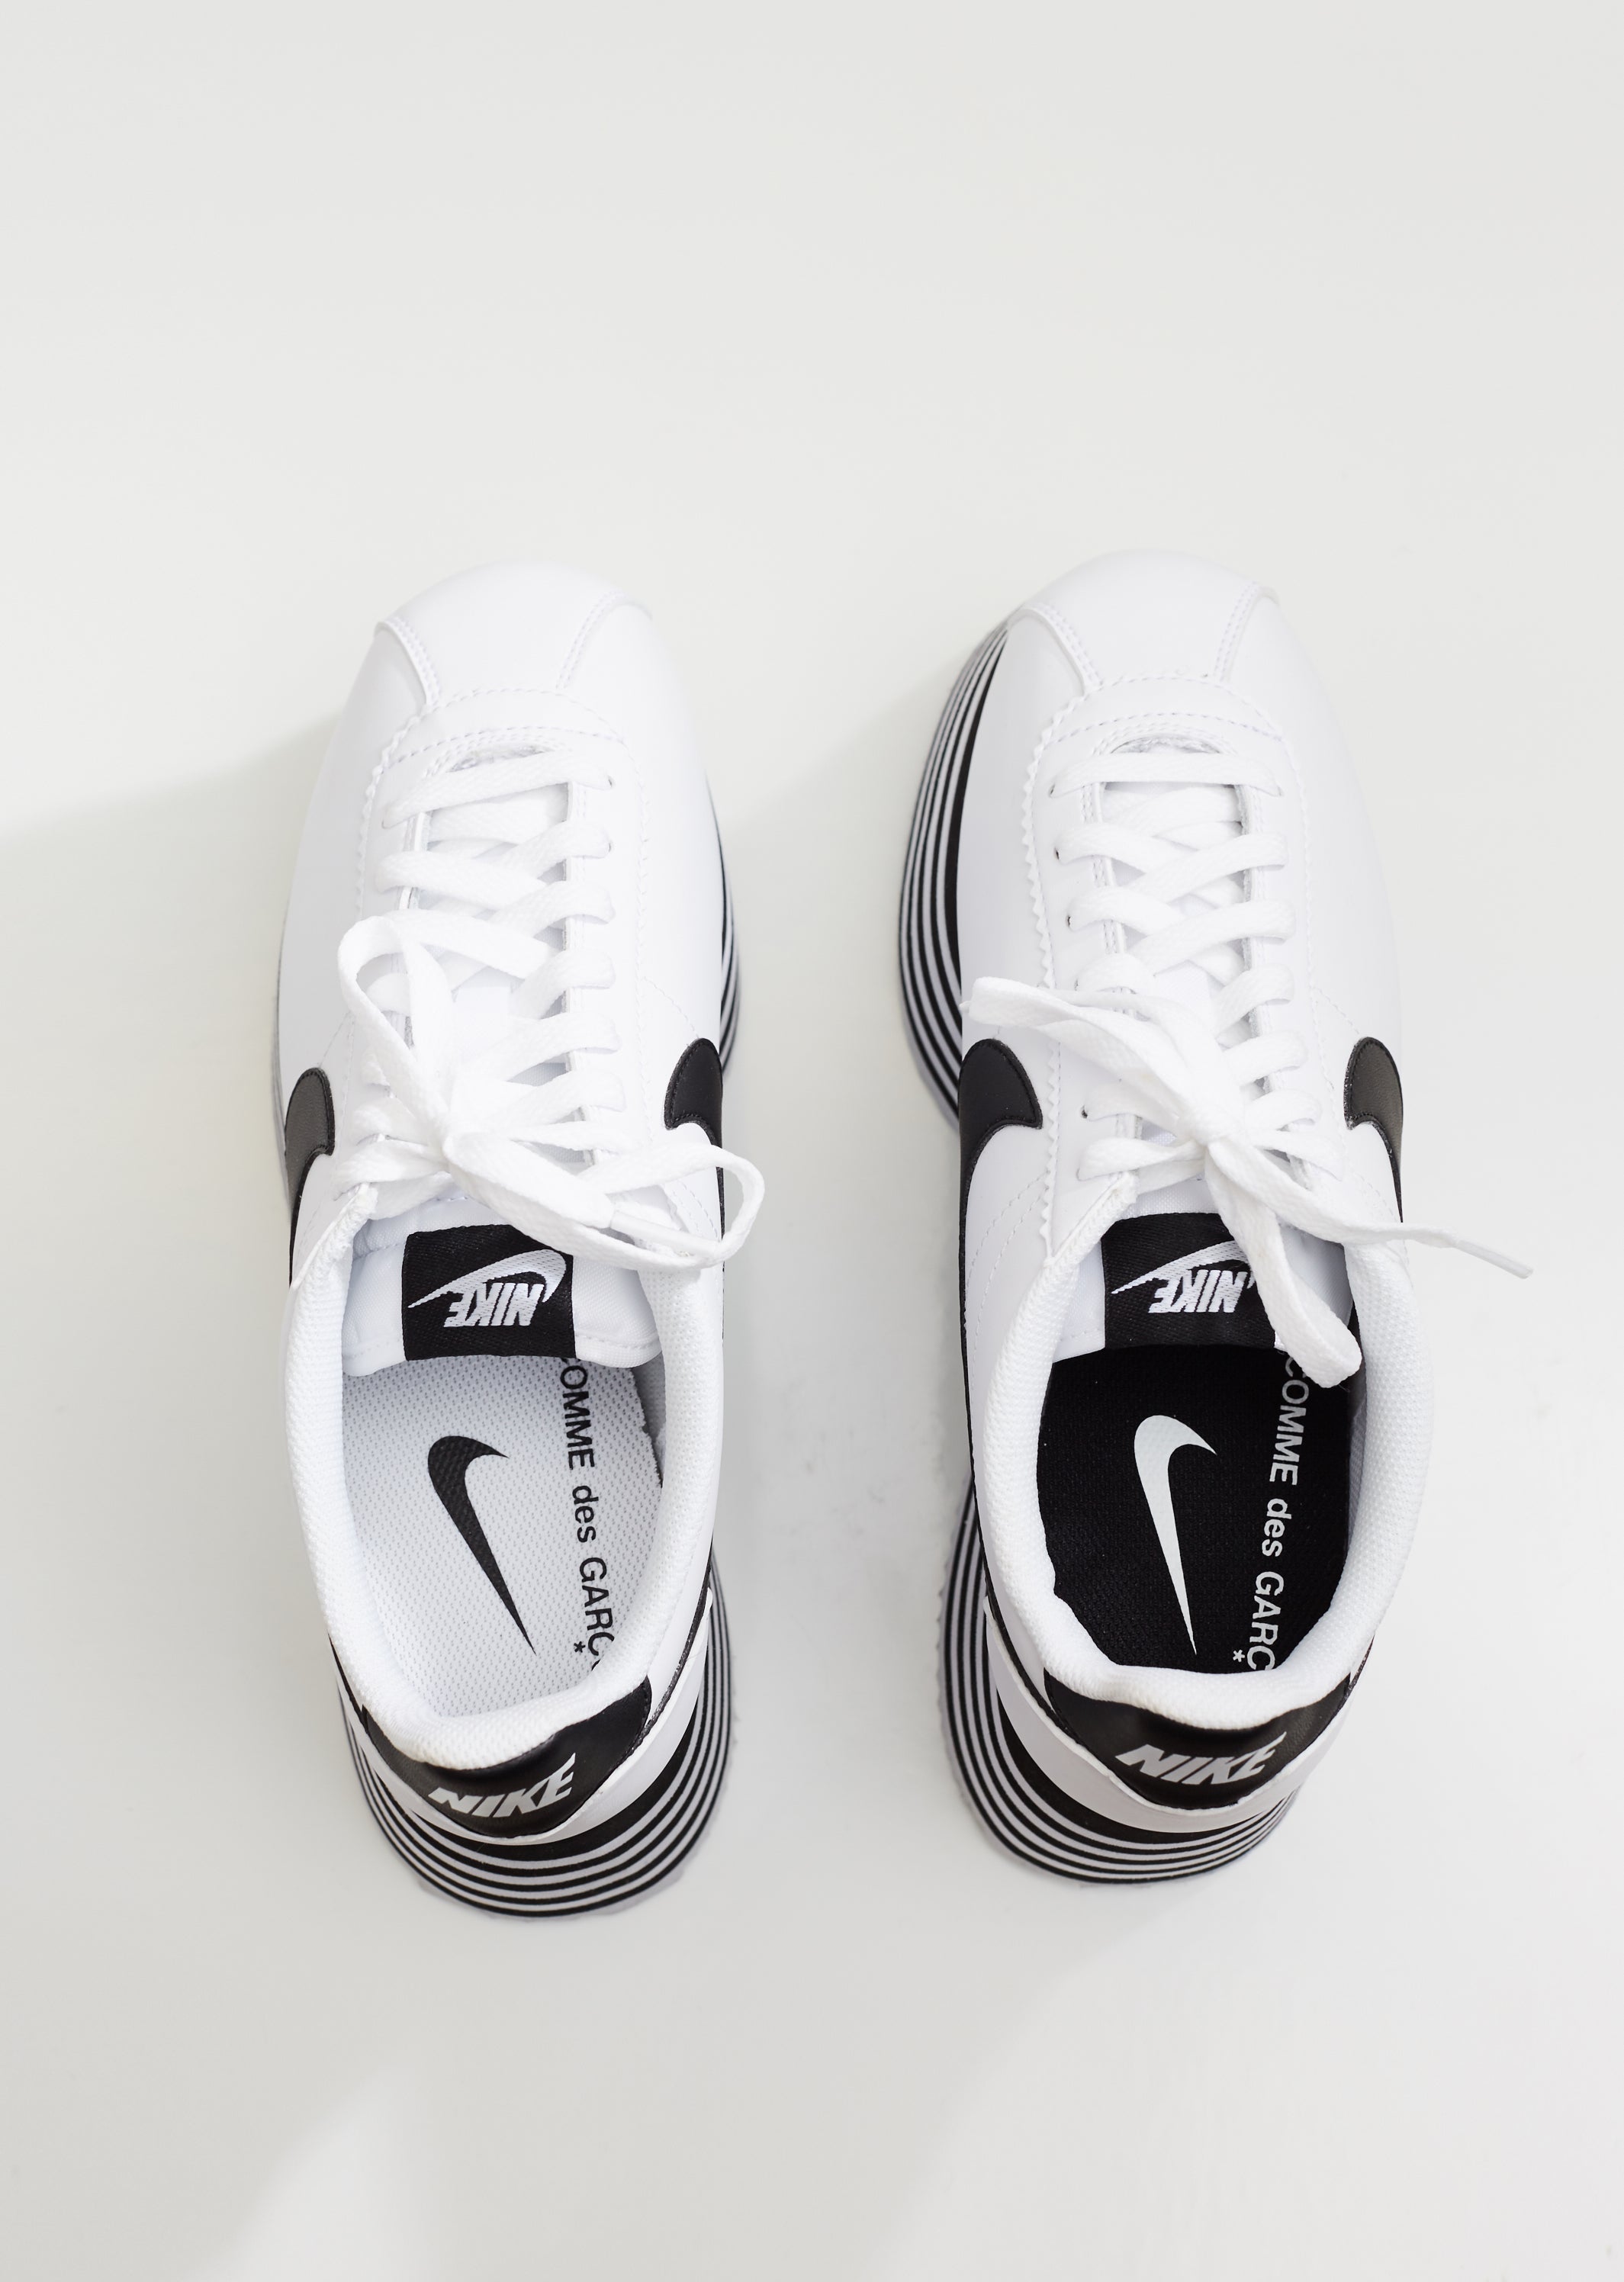 11 Nike cortez ideas  nike, cortez shoes, nike shoes